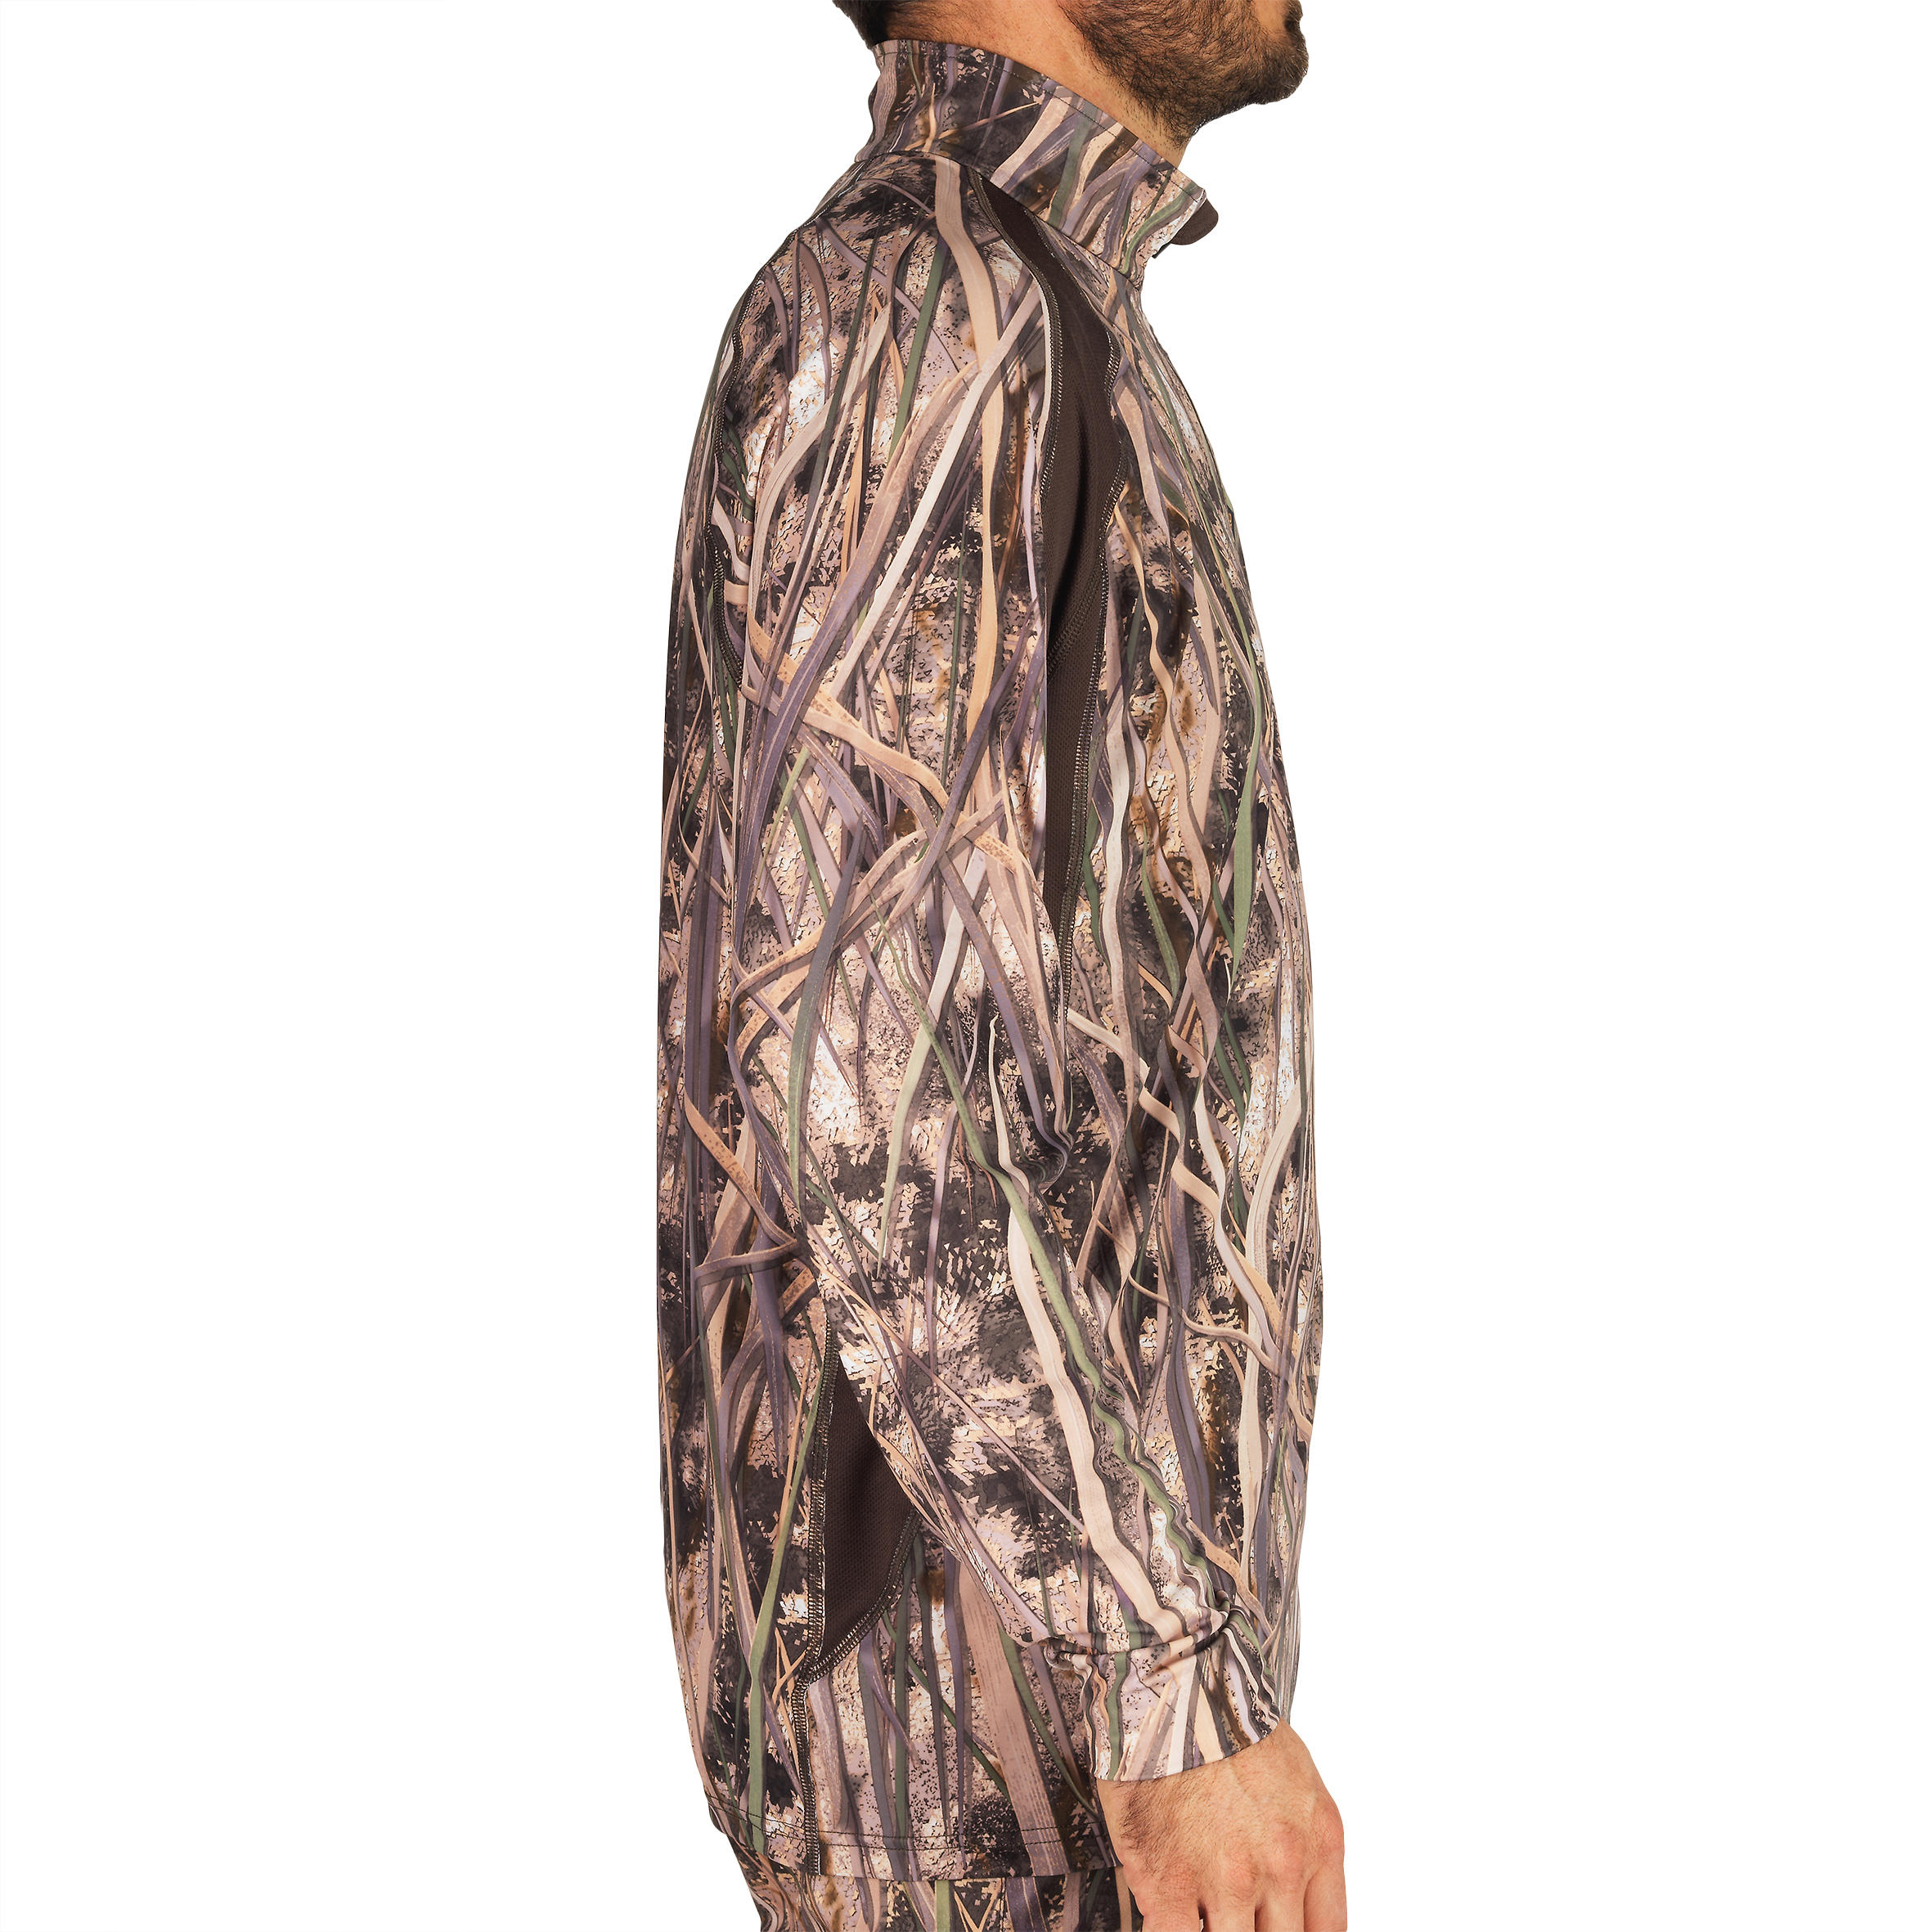 500 Breathable Long Sleeve T-shirt - Wetlands Camo 5/8